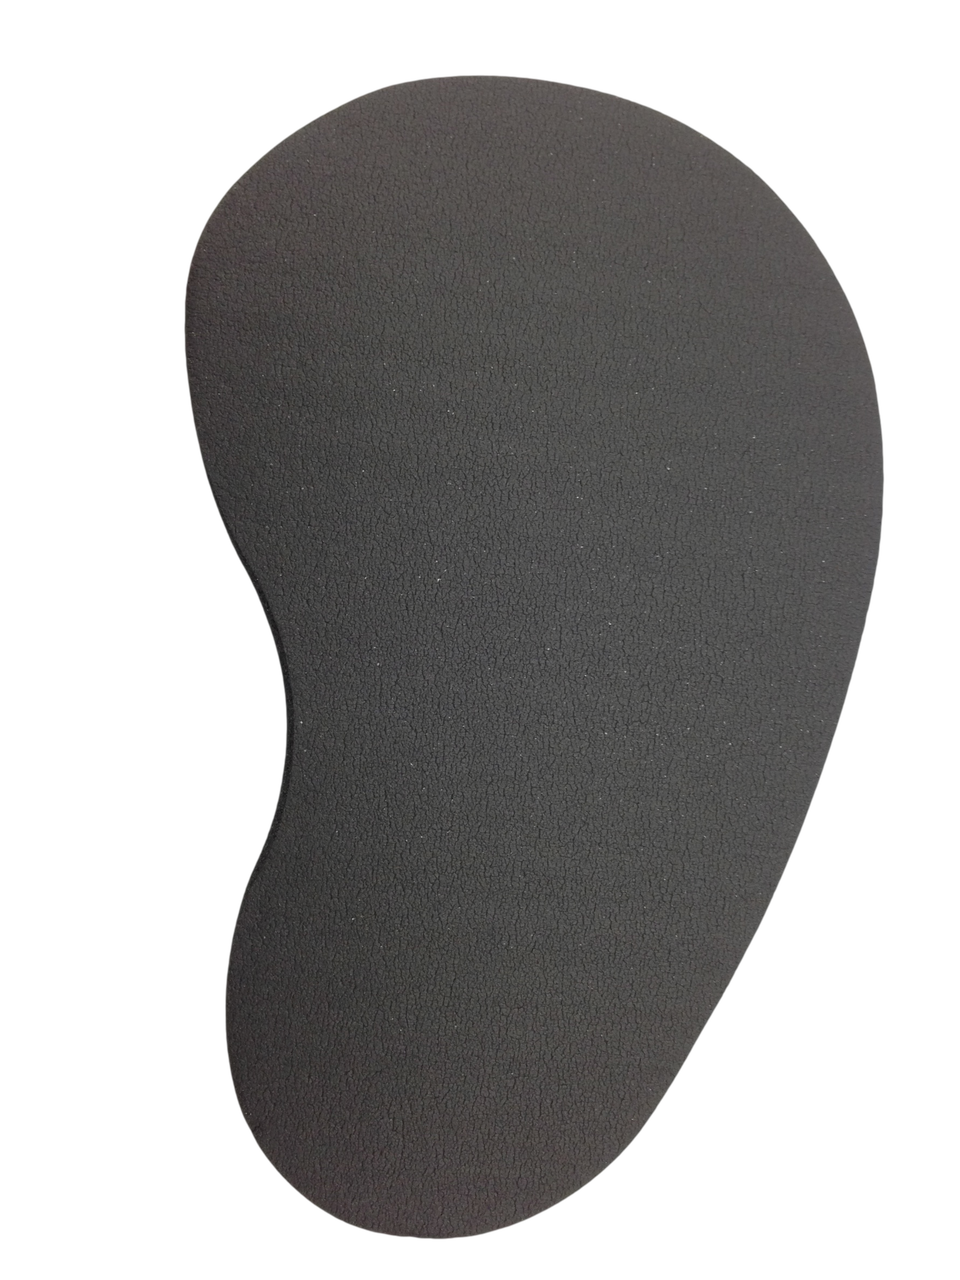 Chloe Noel 3/4 Thick Tailbone Protection Pad PT0001 BB (Black)